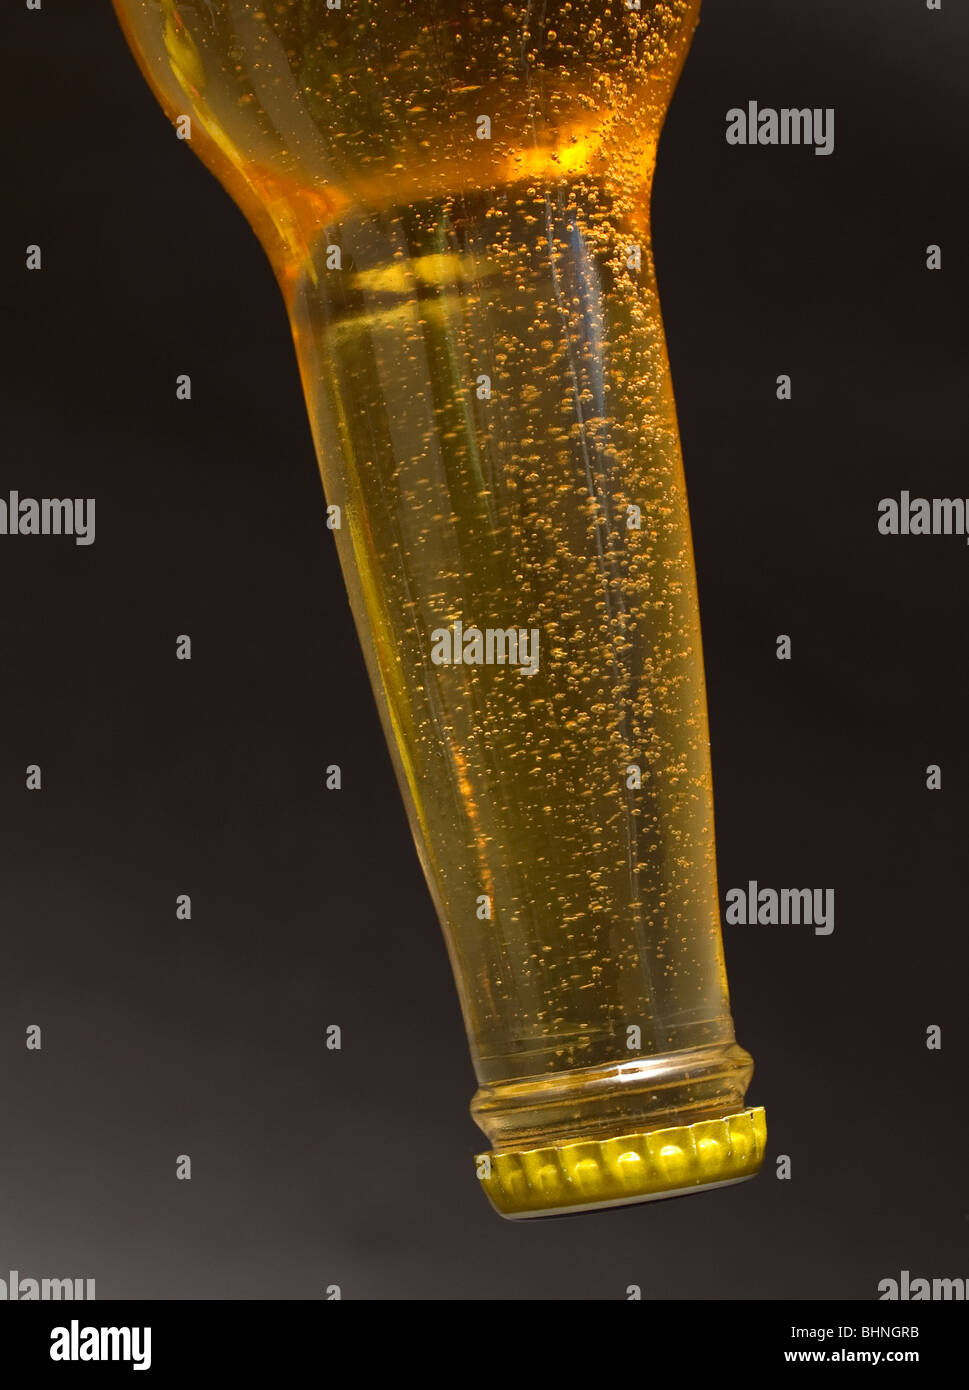 https://c8.alamy.com/comp/BHNGRB/upside-down-beer-bottle-BHNGRB.jpg